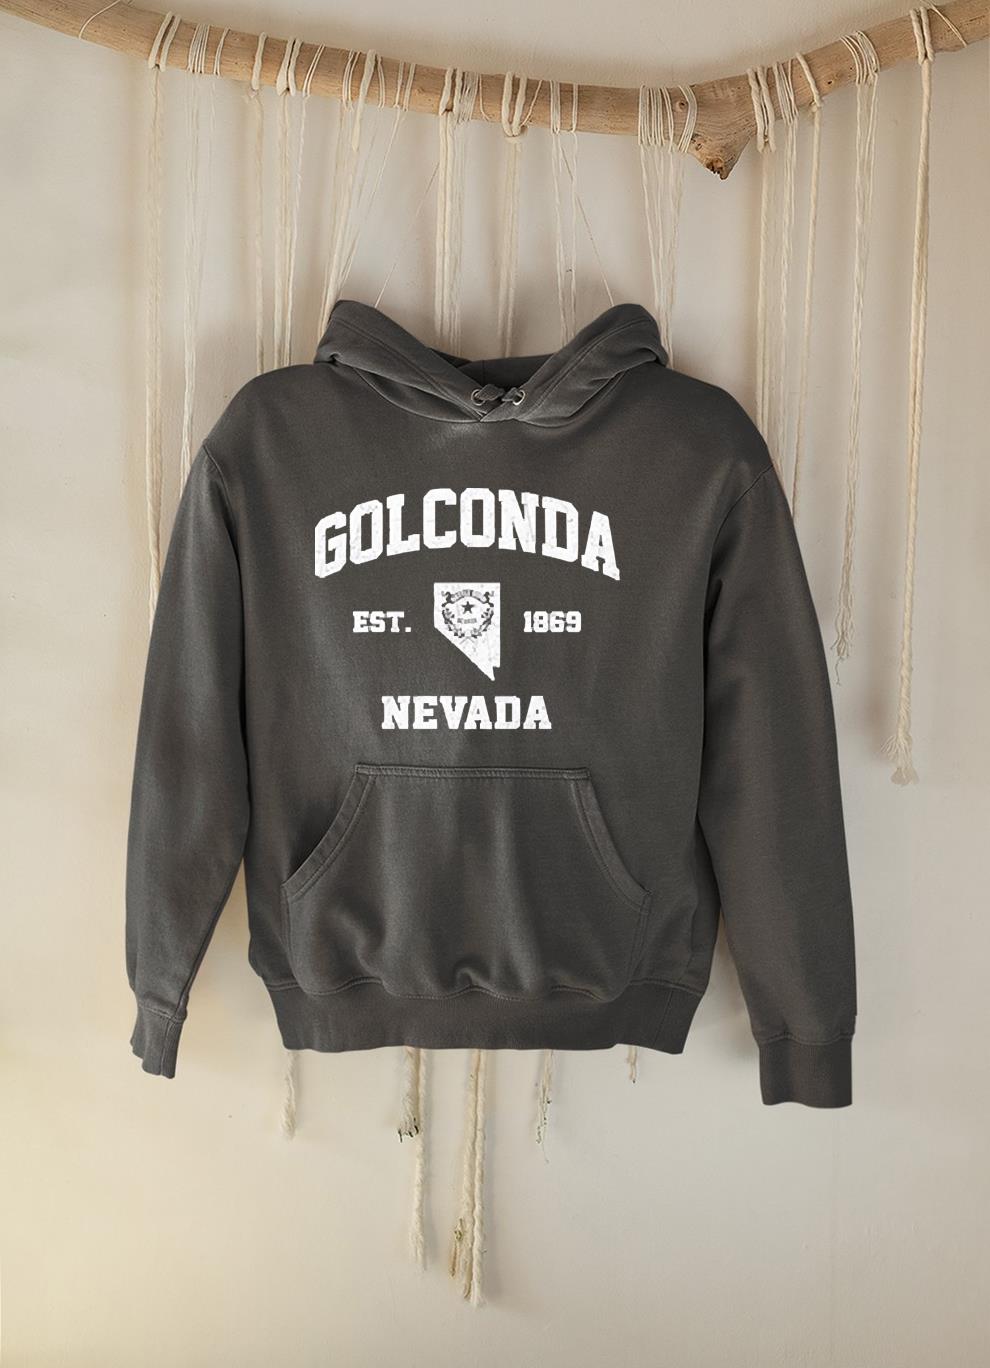 Golconda Est 1869 Nevada Shirt